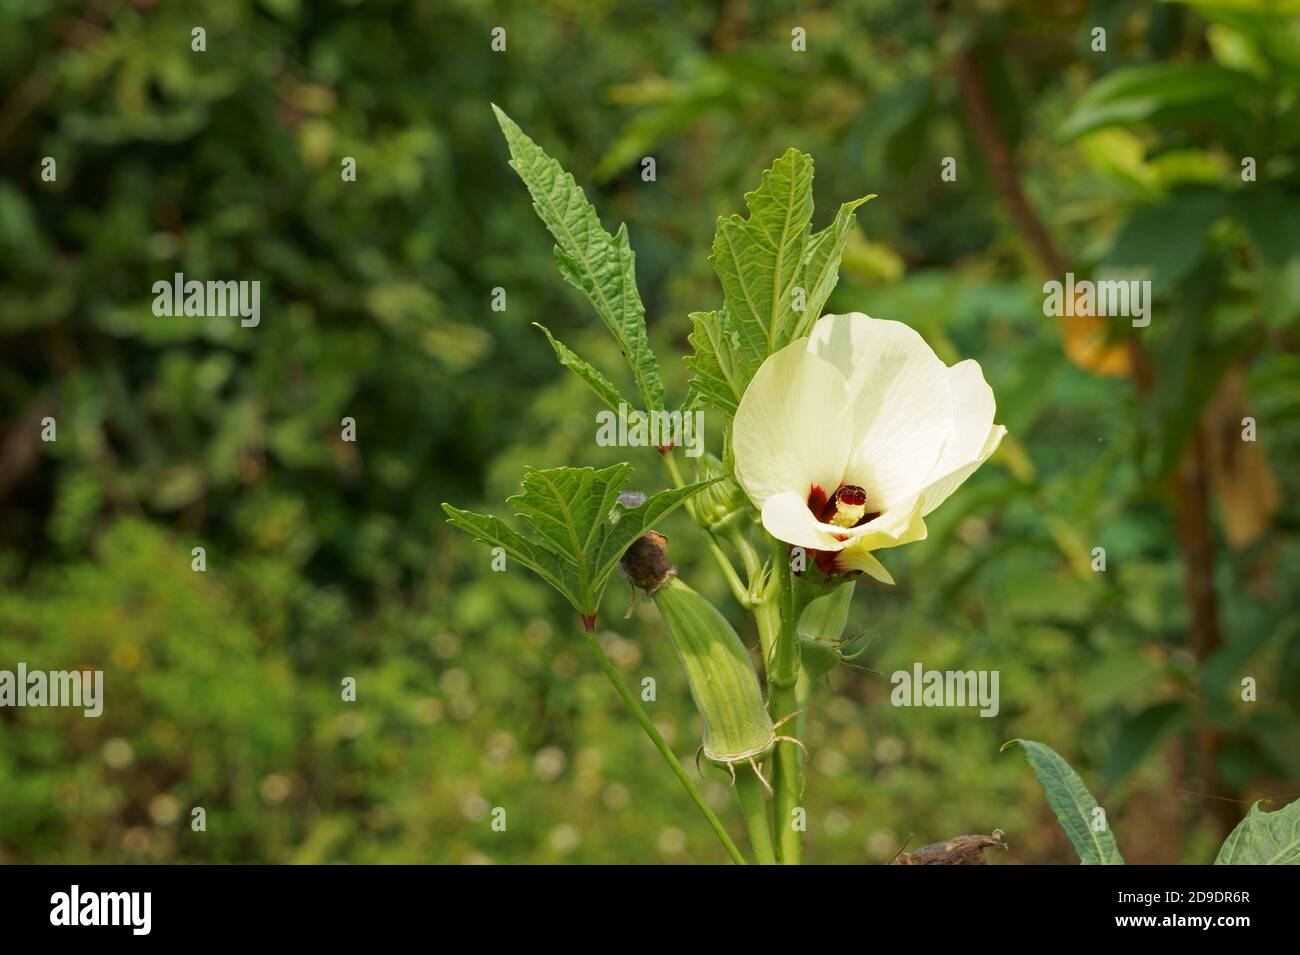 Flower and fruit of okra plant. Abelmoschus esculentus Stock Photo